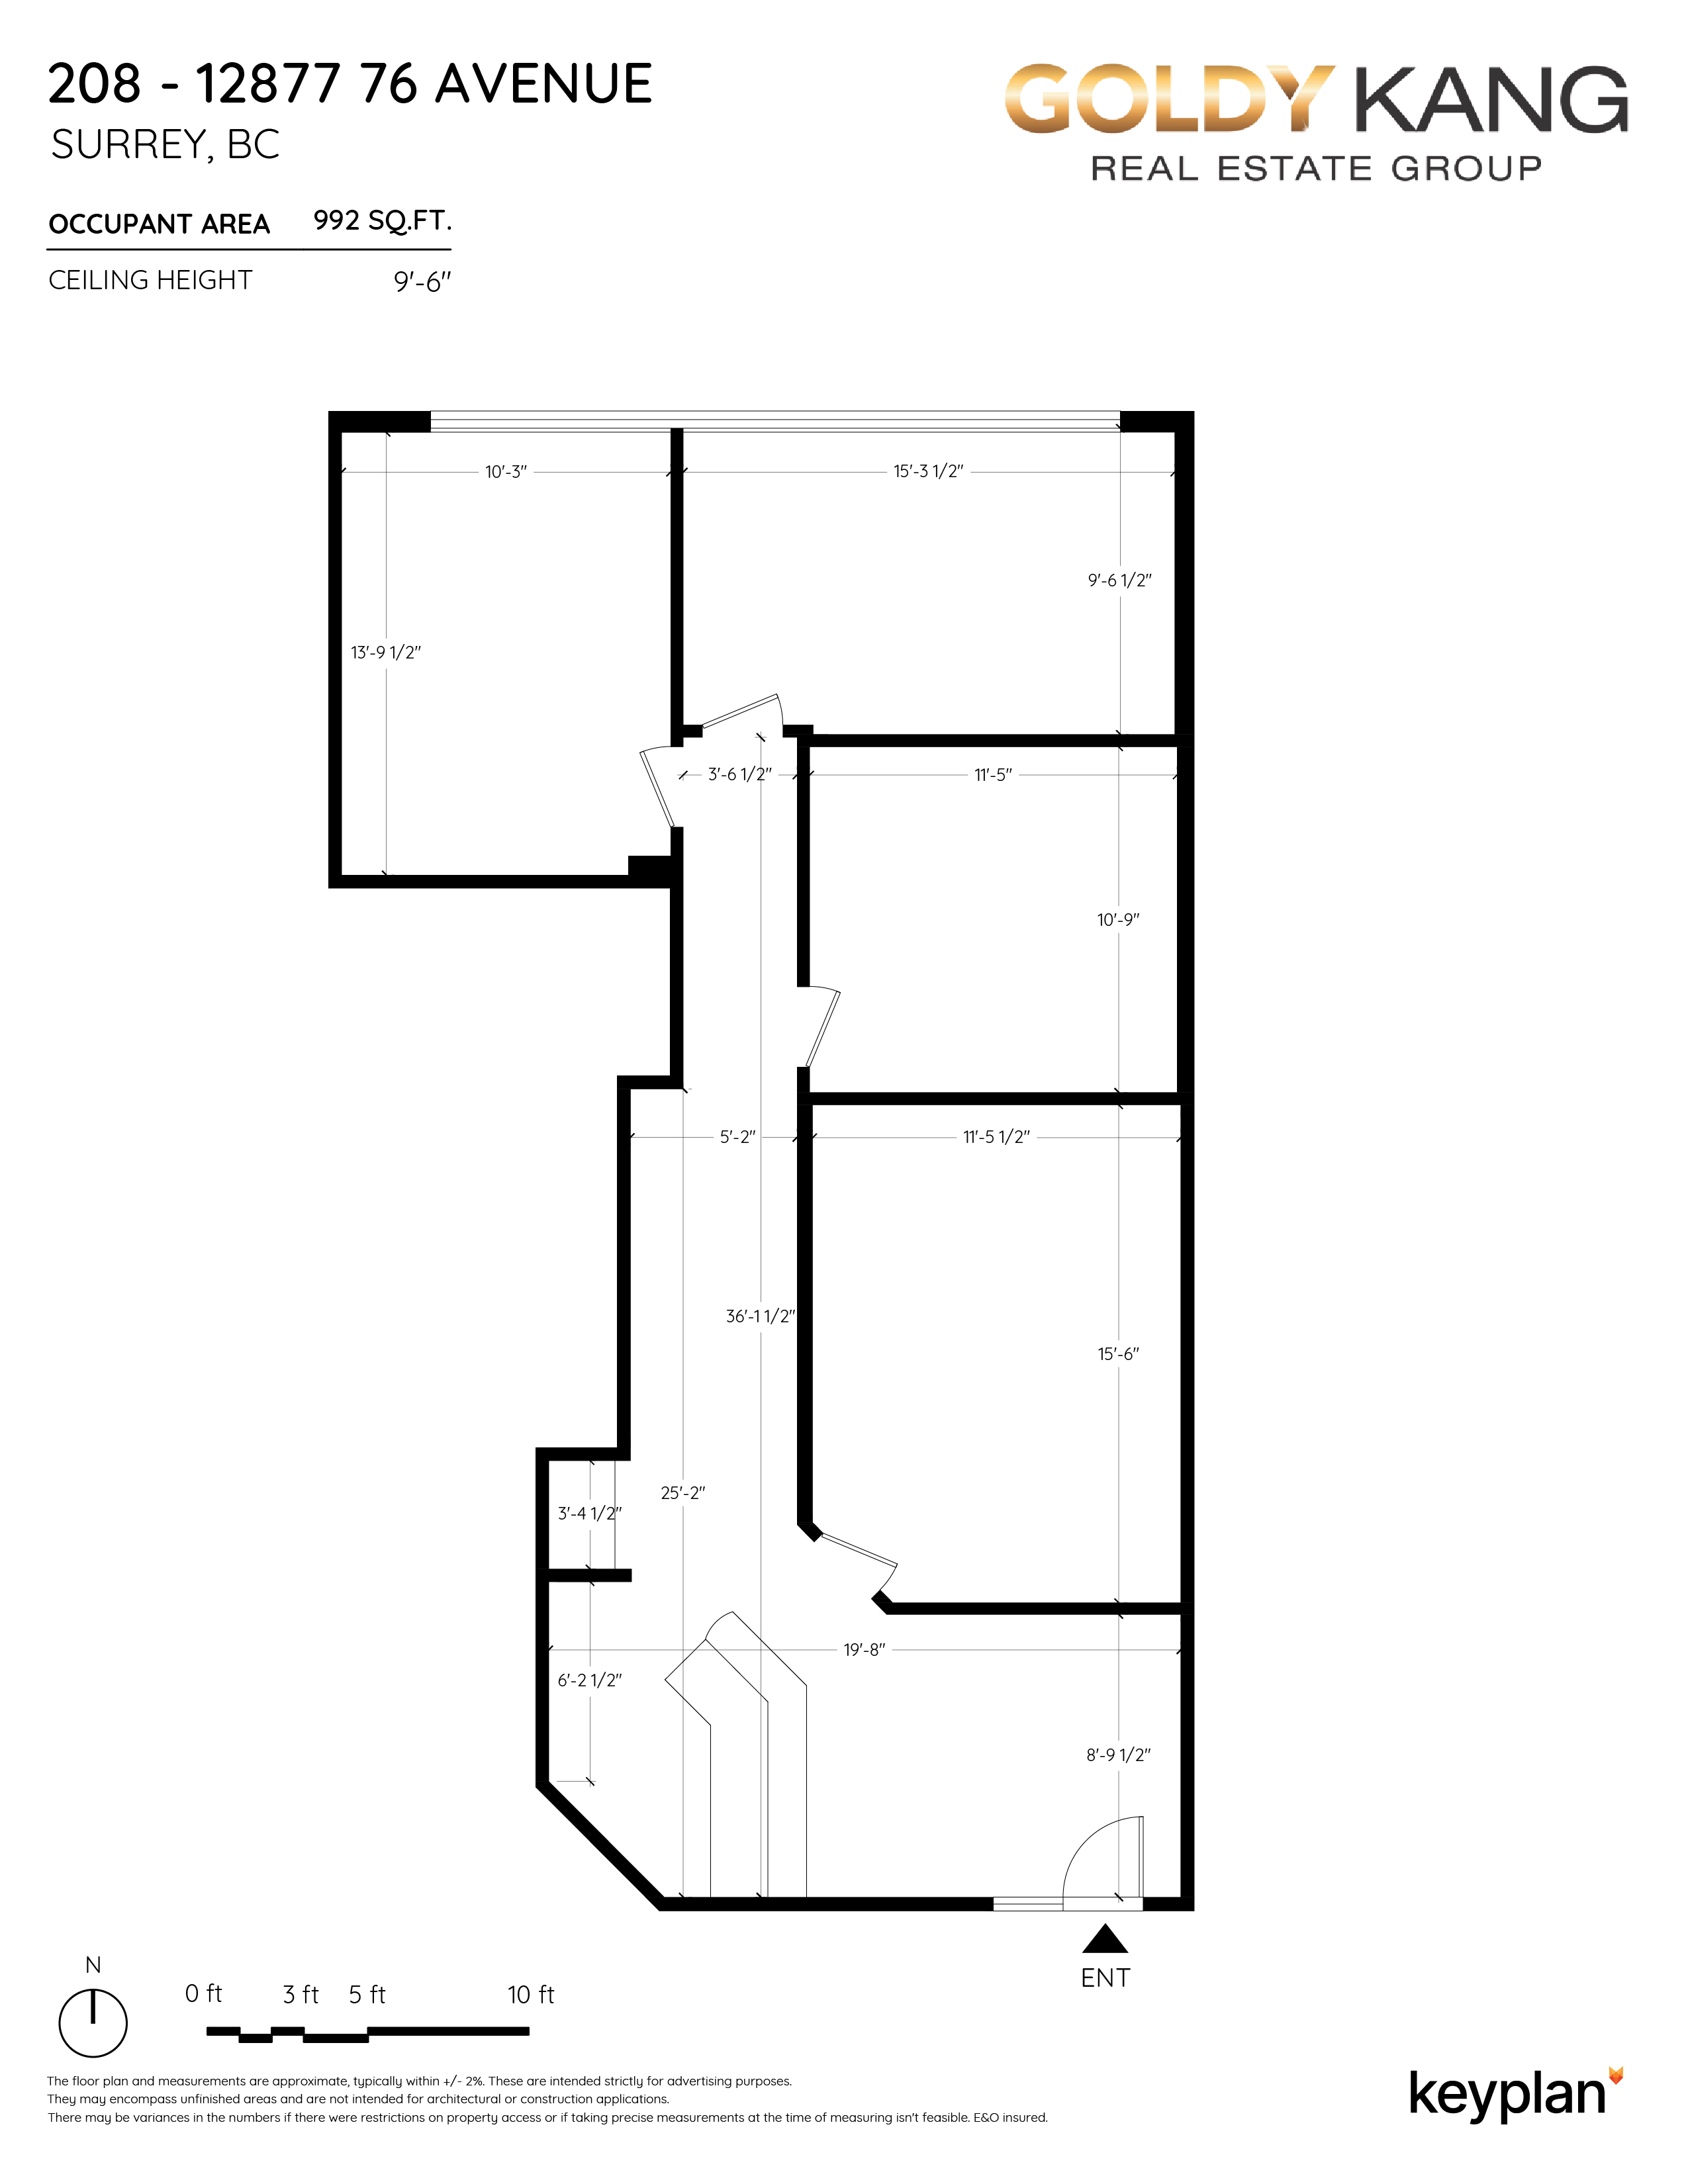 Goldy Kang - Unit 208 - 12877 76 Avenue, Surrey, BC, Canada | Floor Plan 1